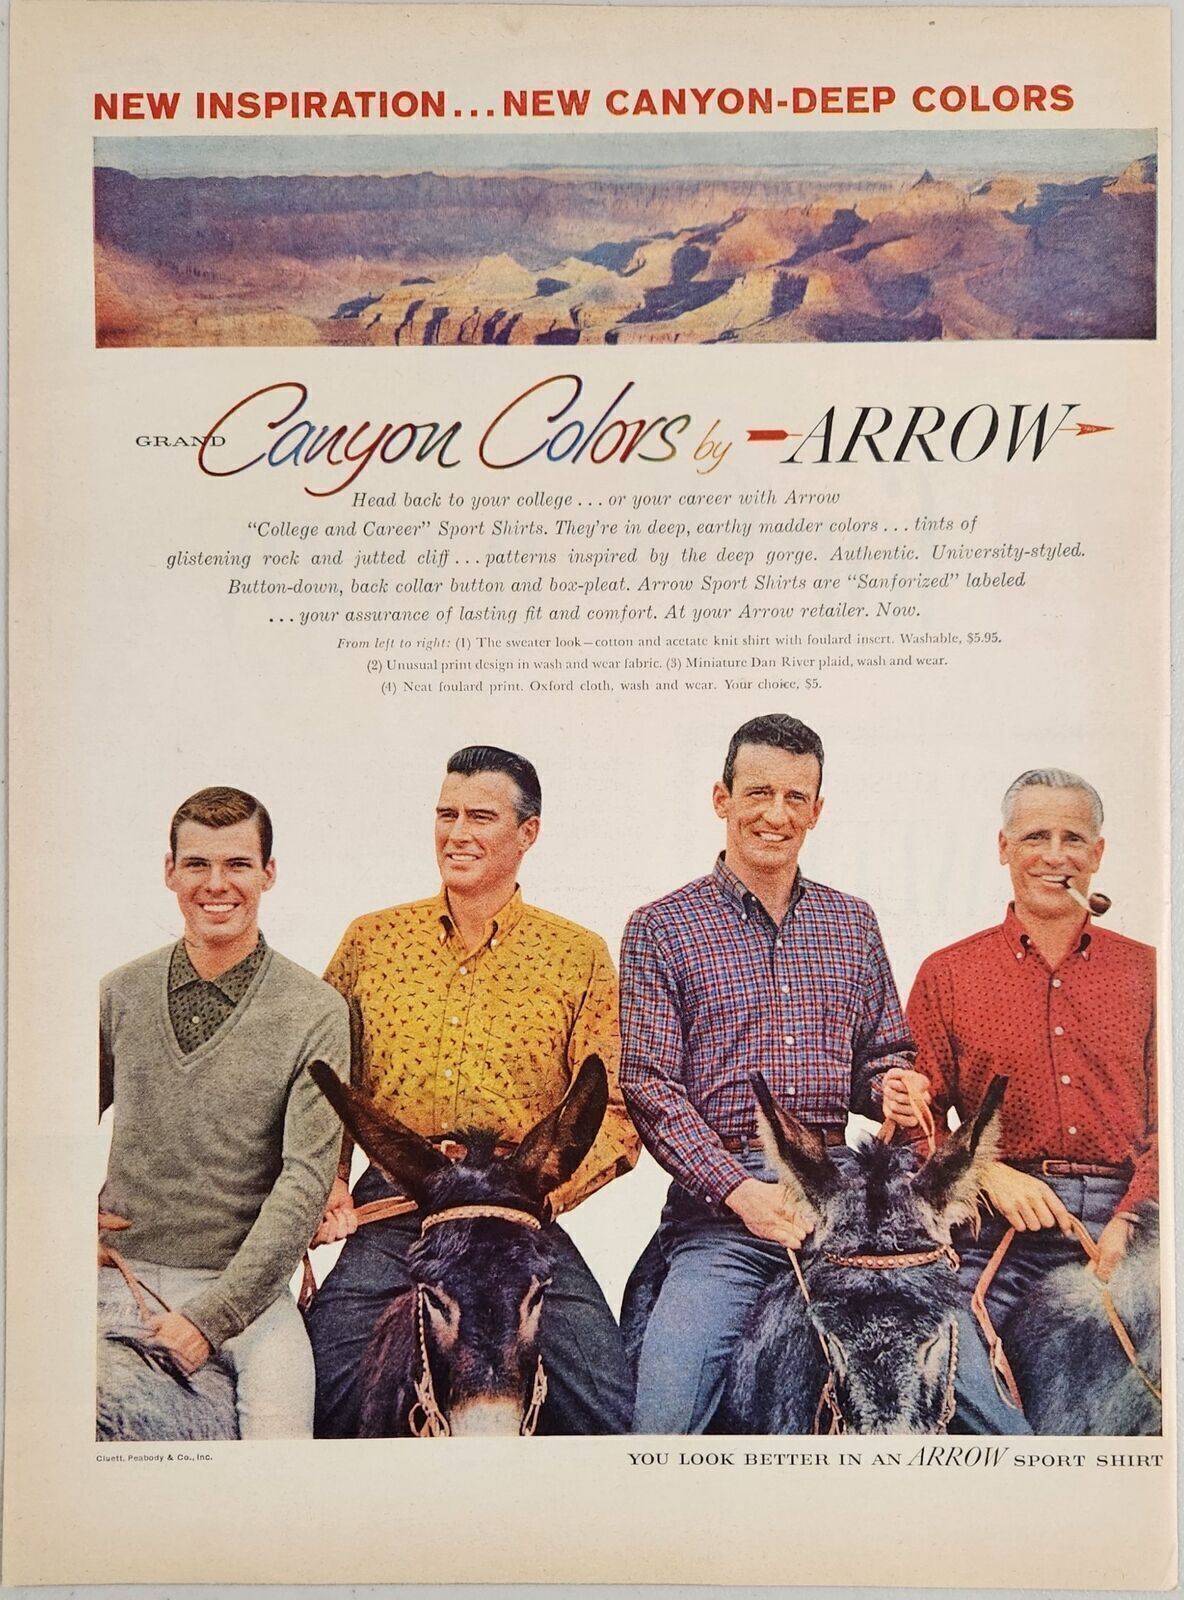 1959 Print Ad Arrow Shirts Grand Canyon Colors Men on Mules Man Smokes Pipe